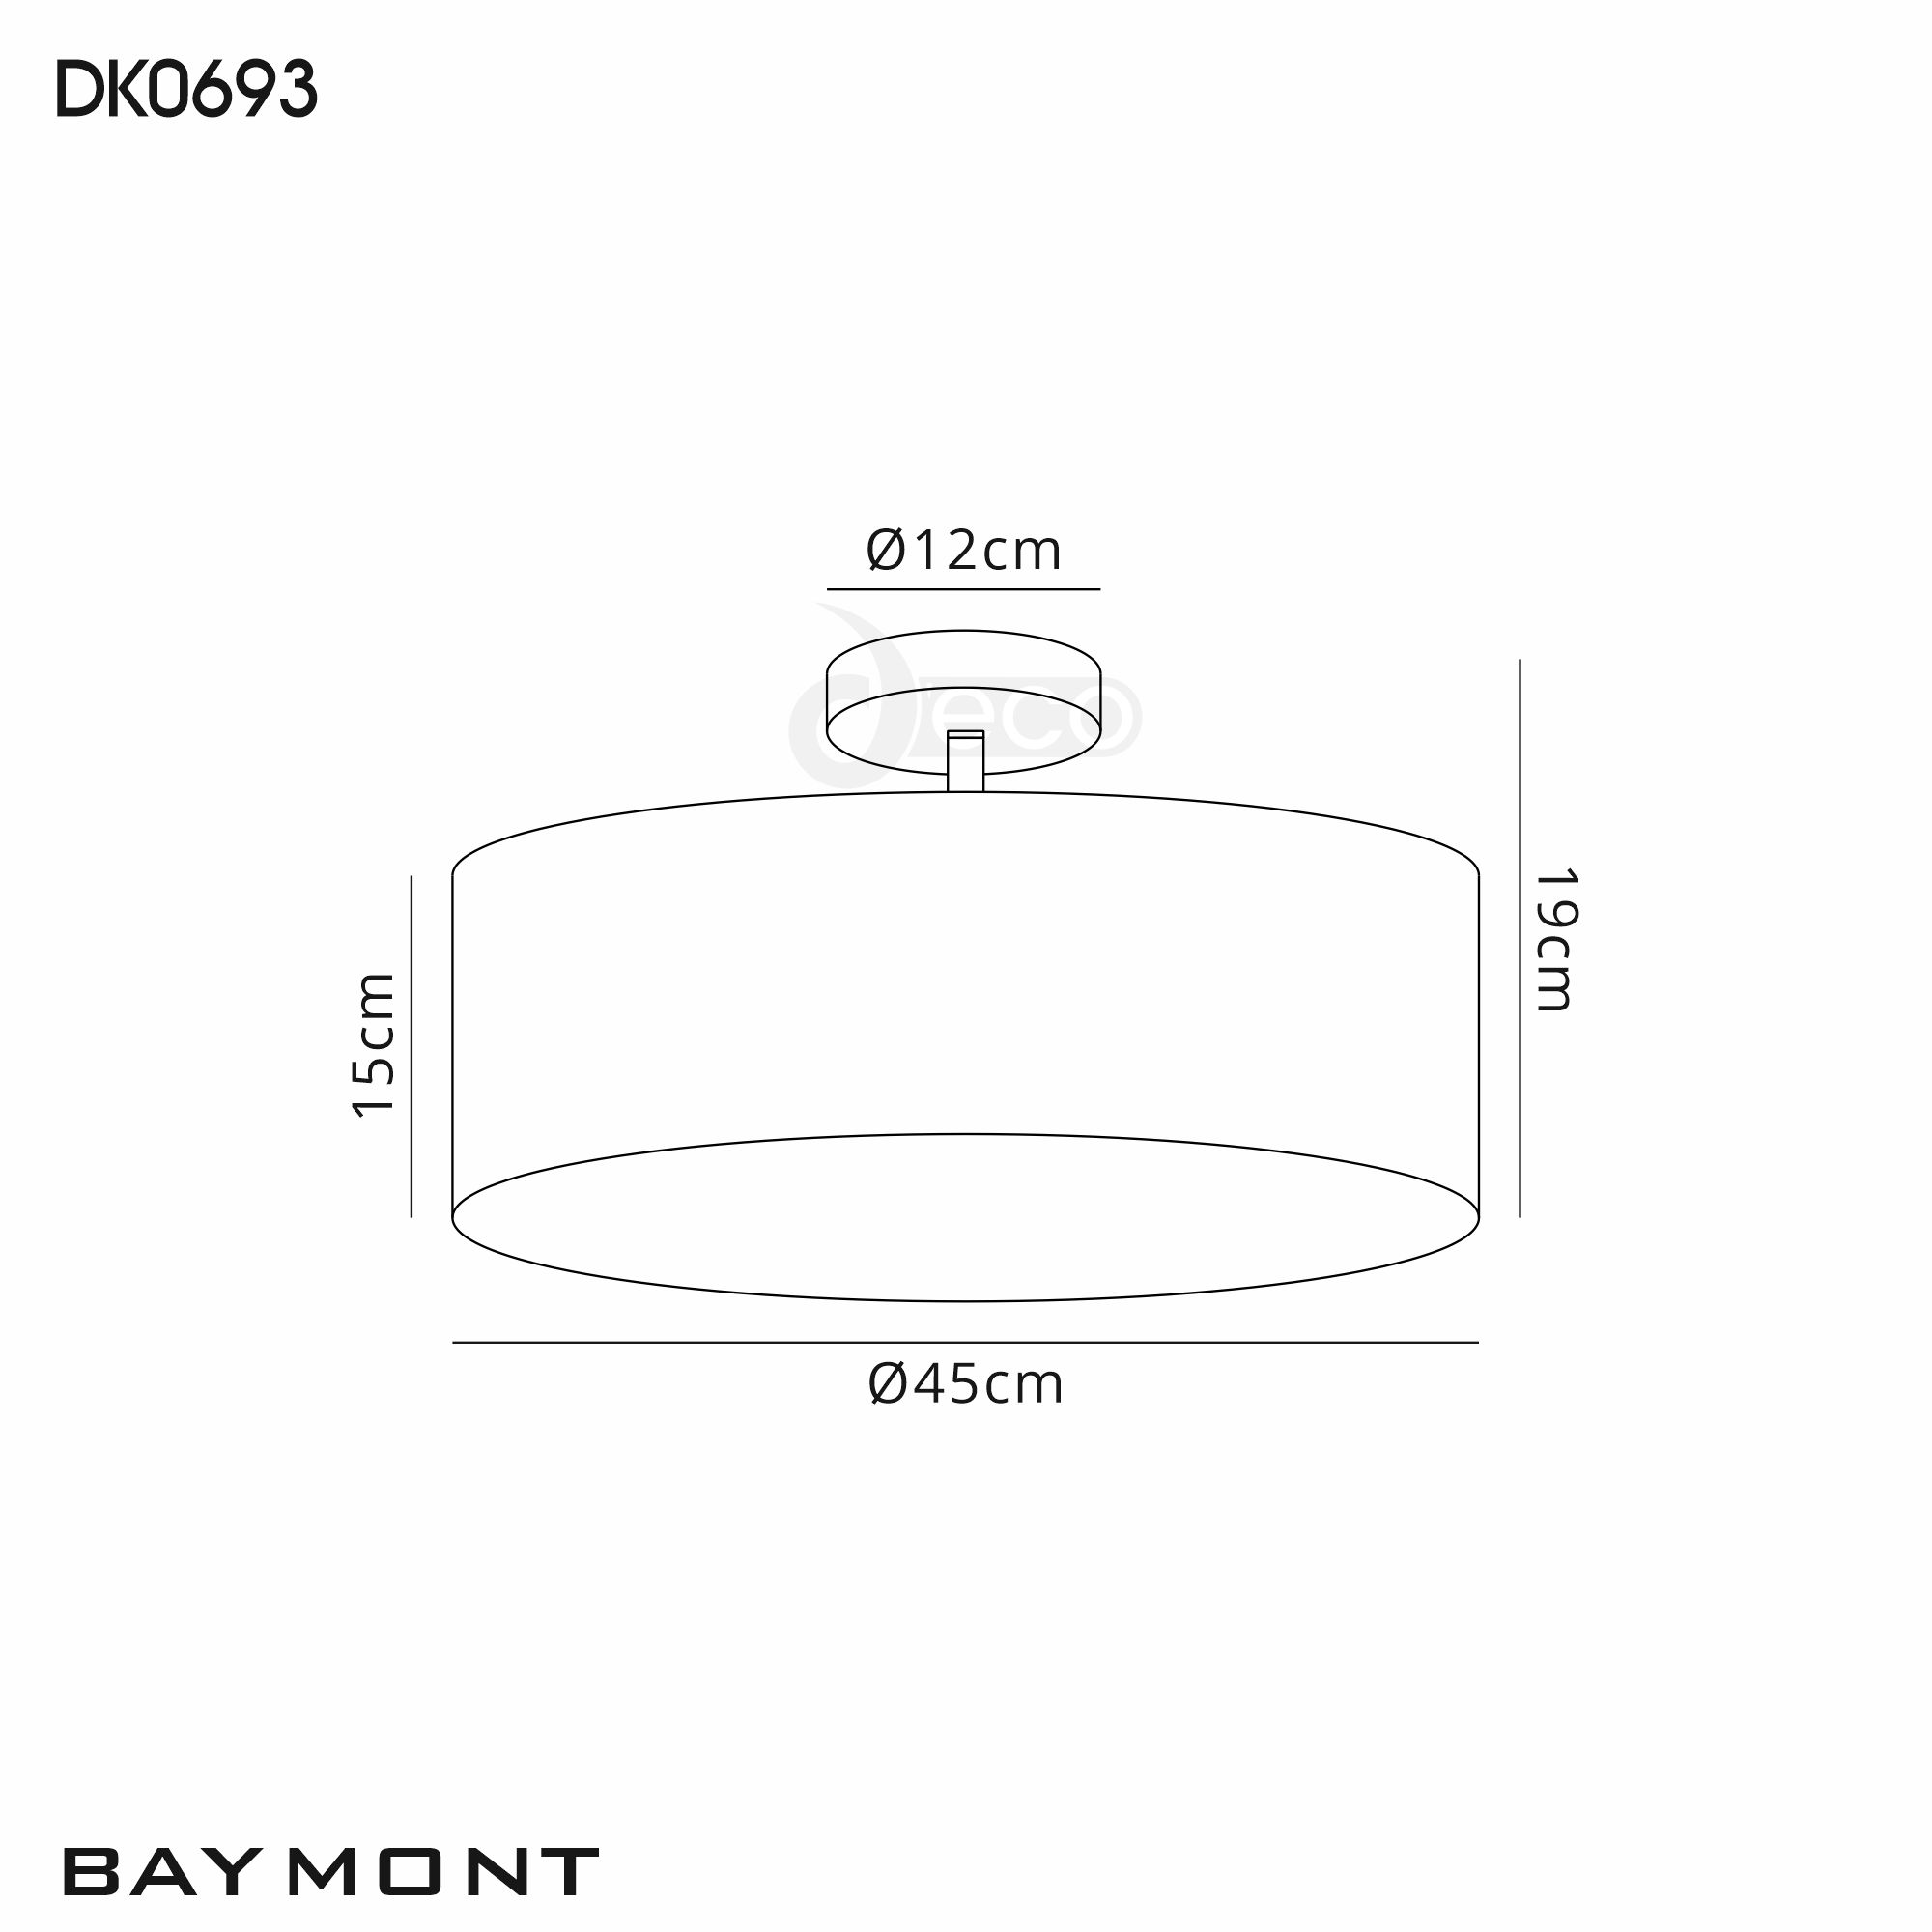 DK0693  Baymont 45cm, Semi Flush 3 Light Polished Chrome, Nude Beige/Moonlight